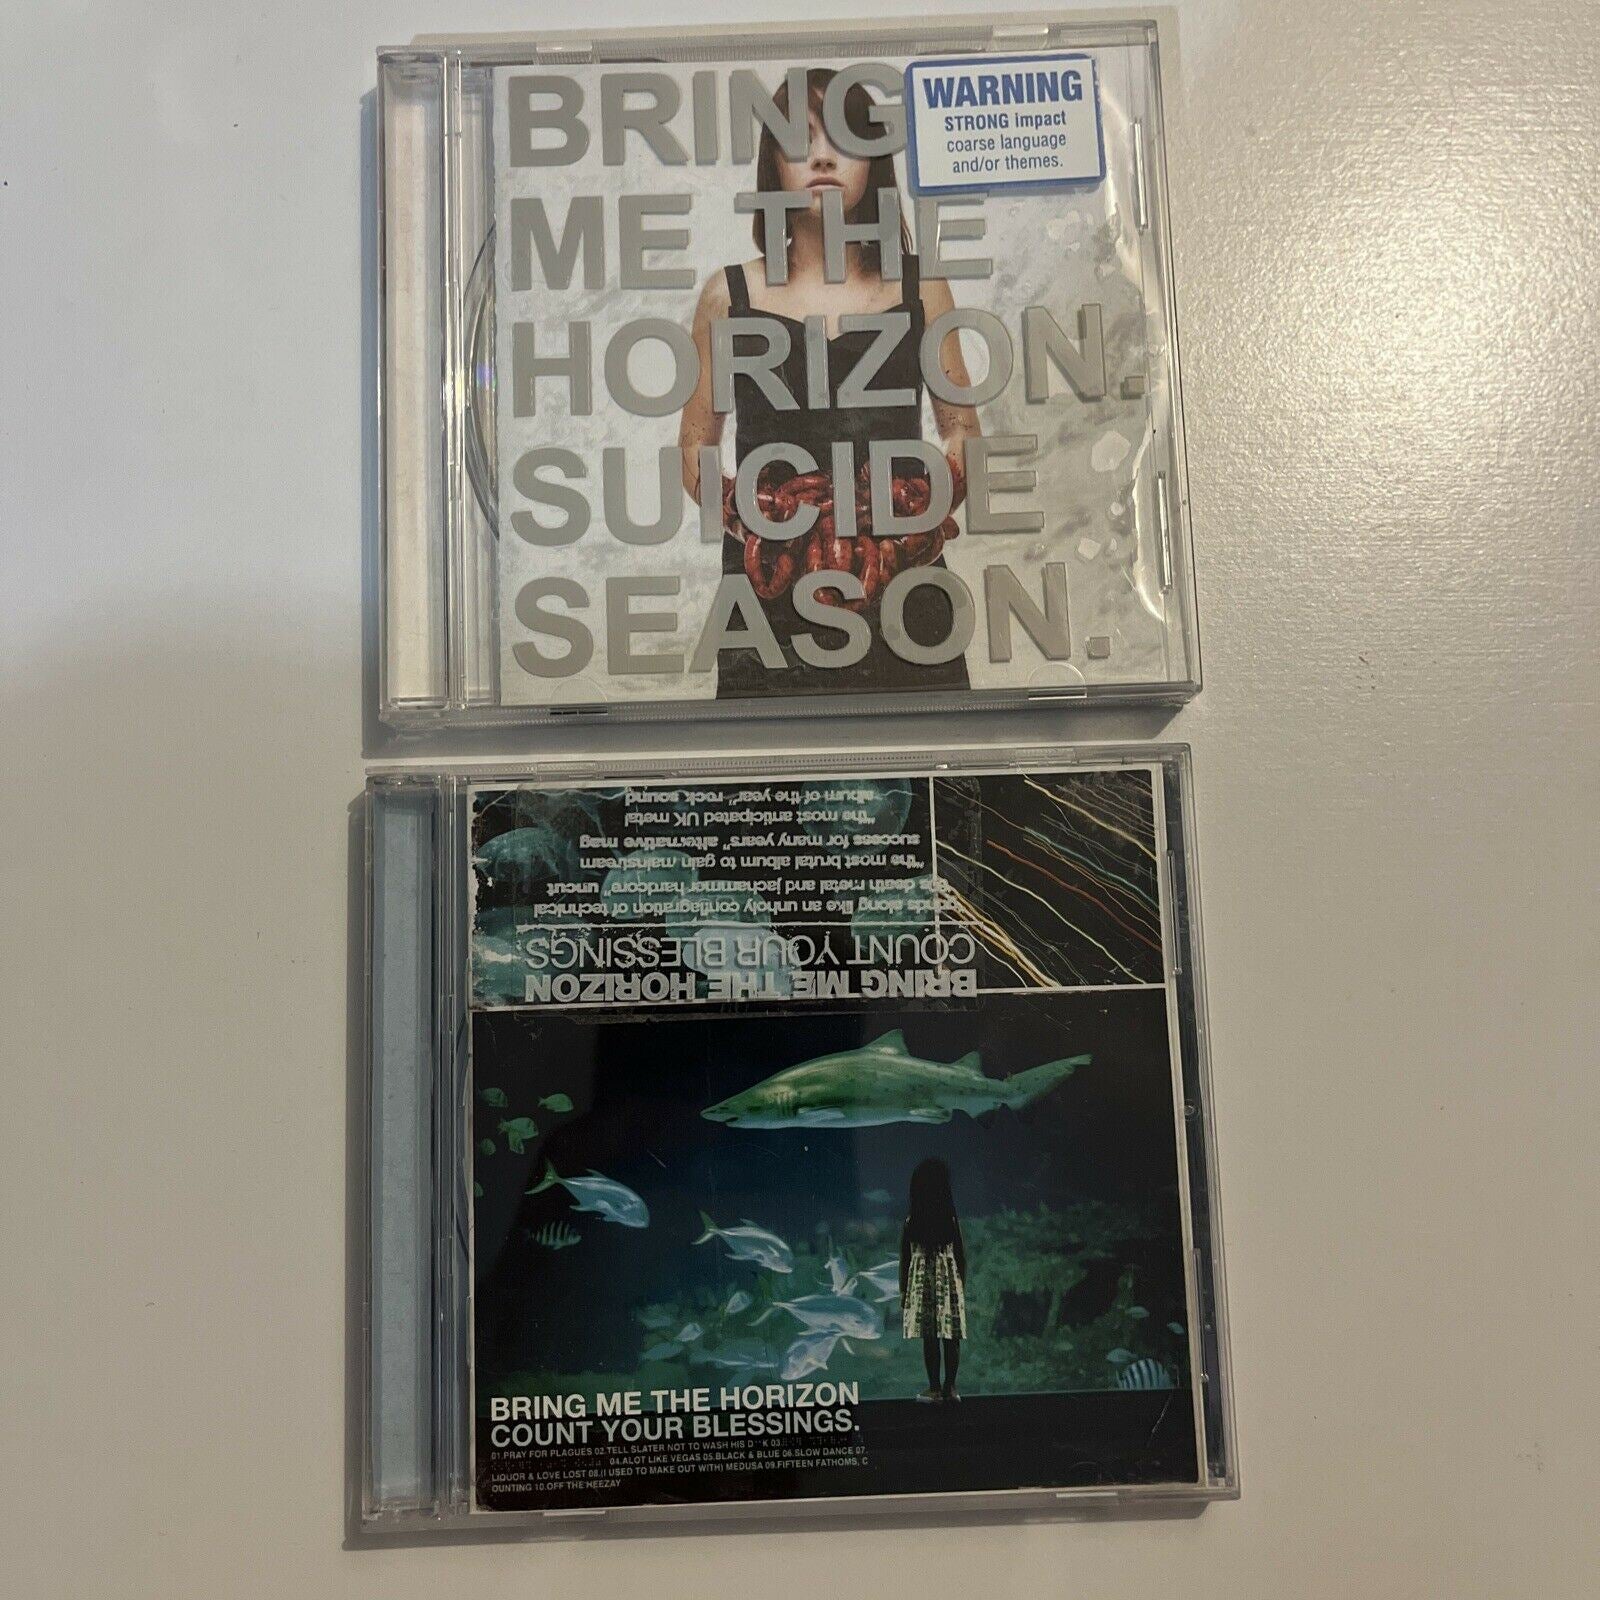 10 Years On: Bring Me The Horizon - 'Suicide Season